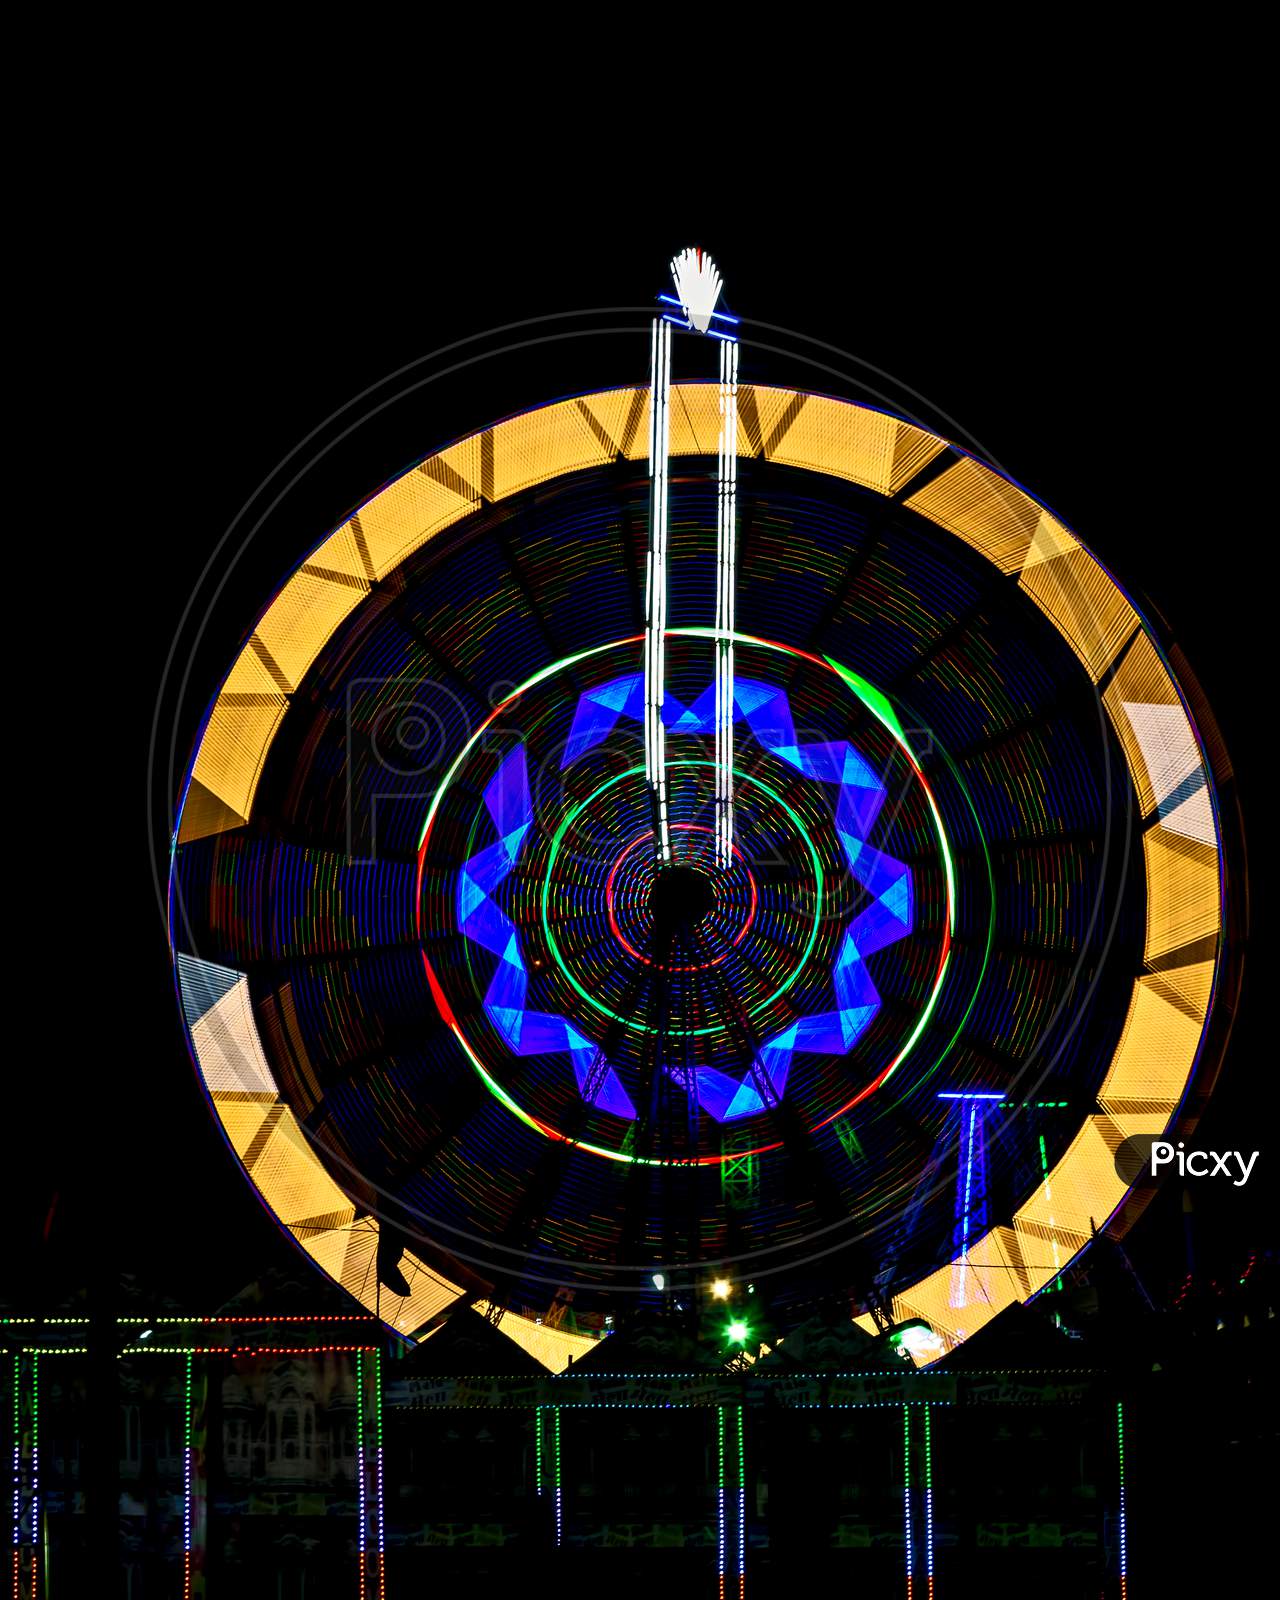 Fun Fair Giant Ferris Wheel Spinning At Night. A Rotating Giant Wheel At Night.